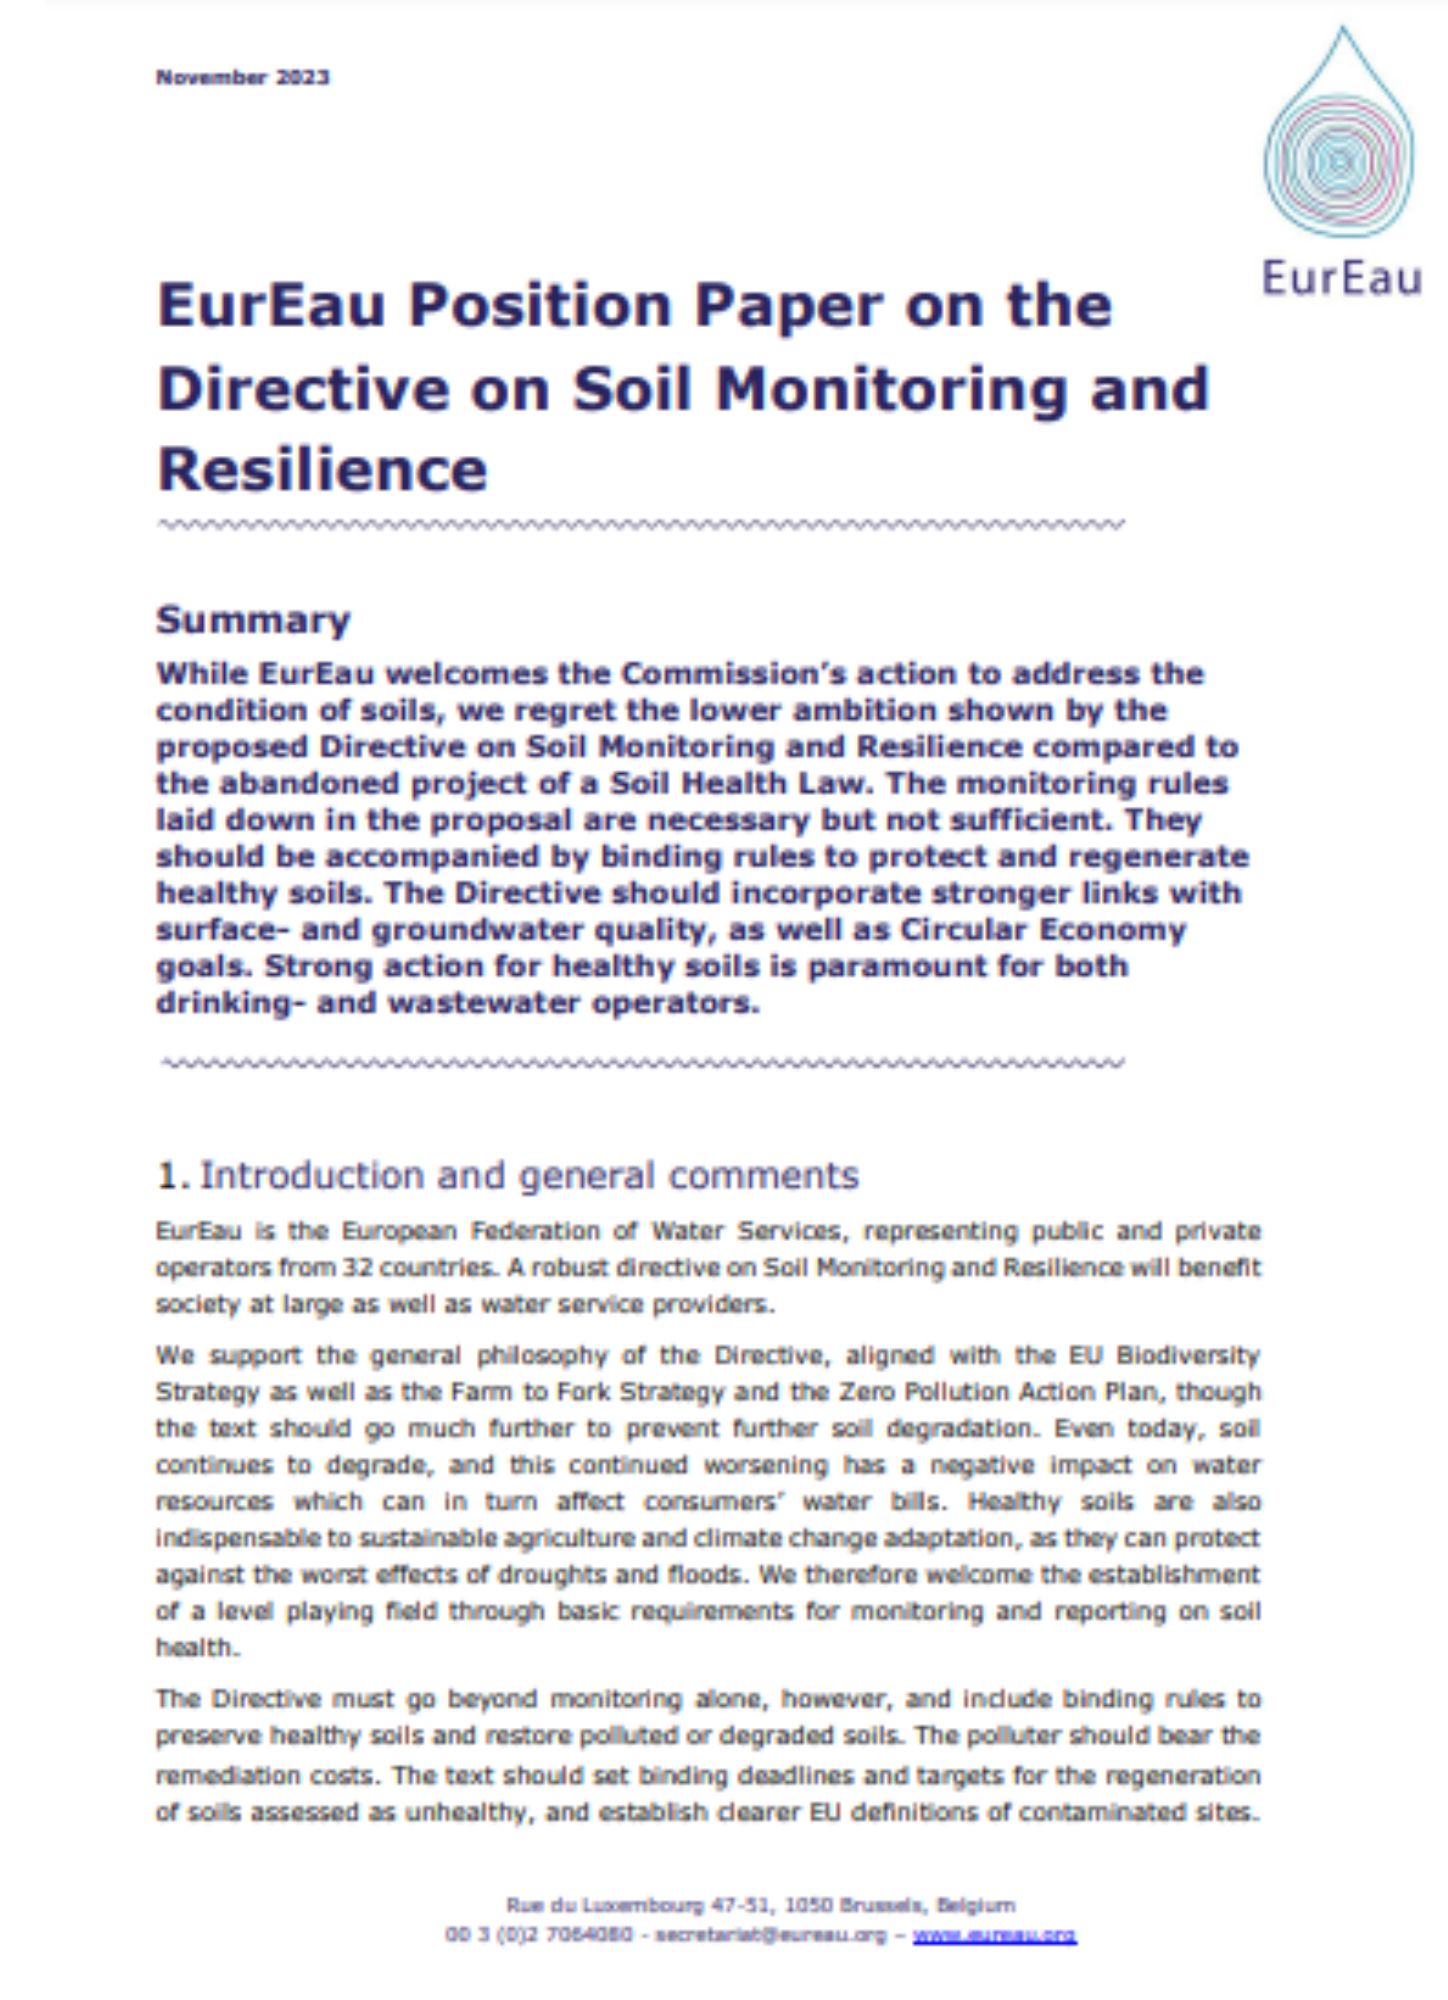 EurEau Position Paper on Soil Monitoring